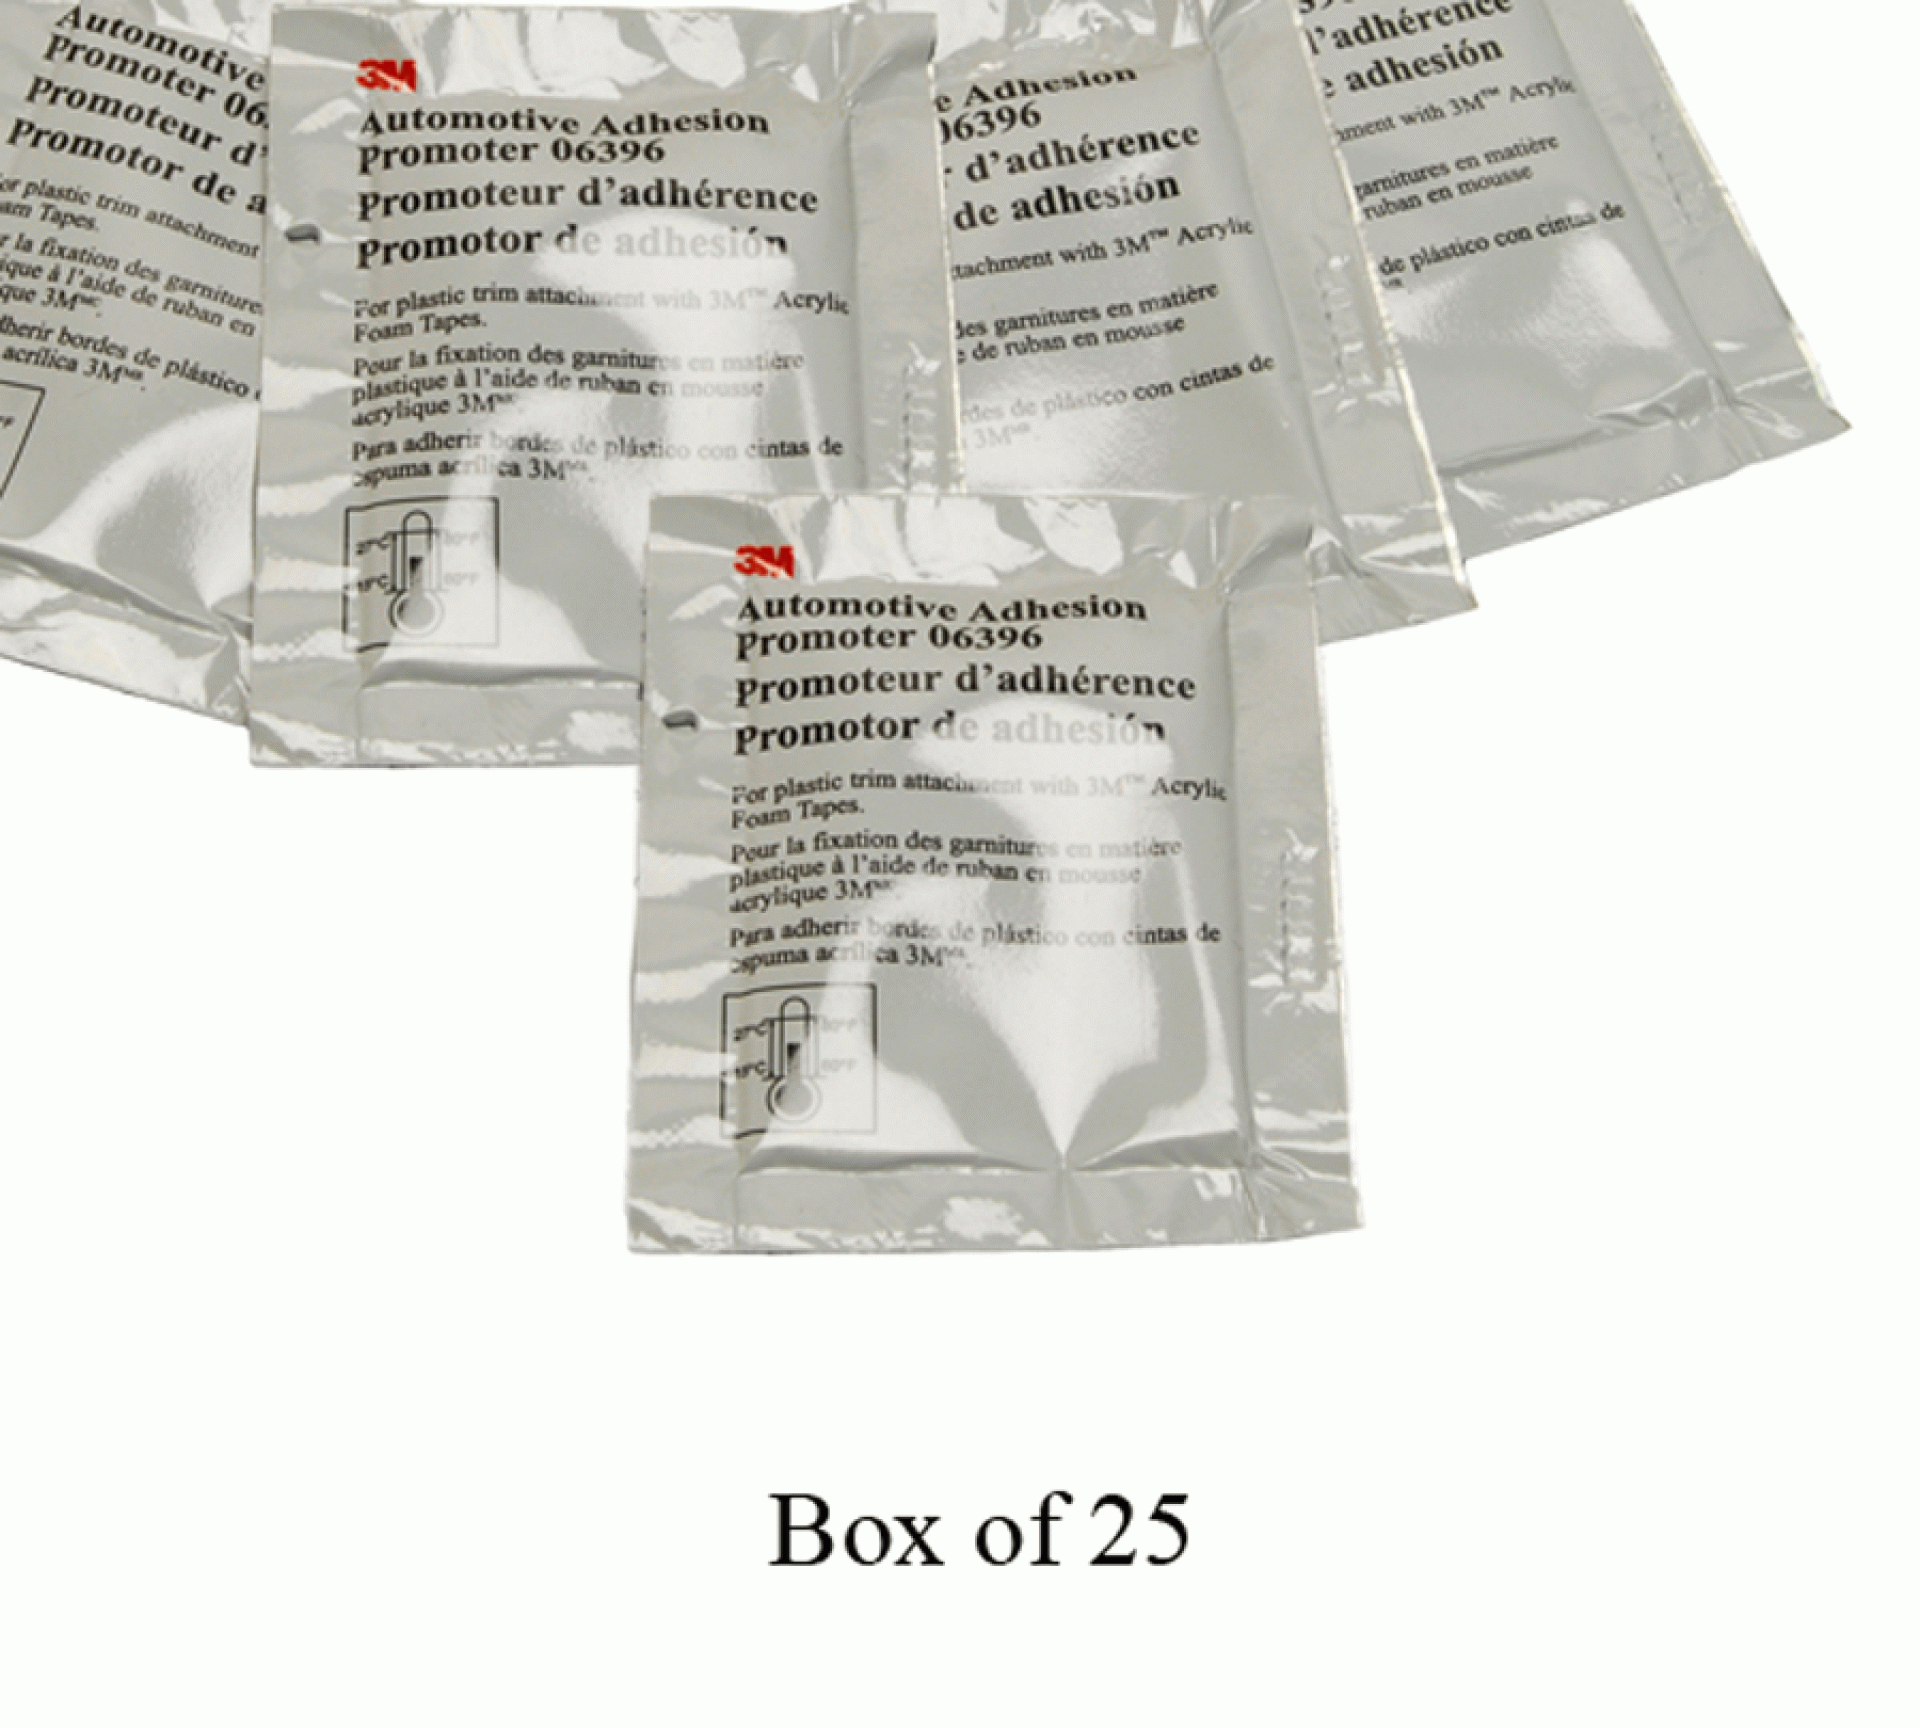 3M Company | 06396 | Automotive Adhesion Promoter Sponge Applicator Packet 2.5 cc 25 packs per box